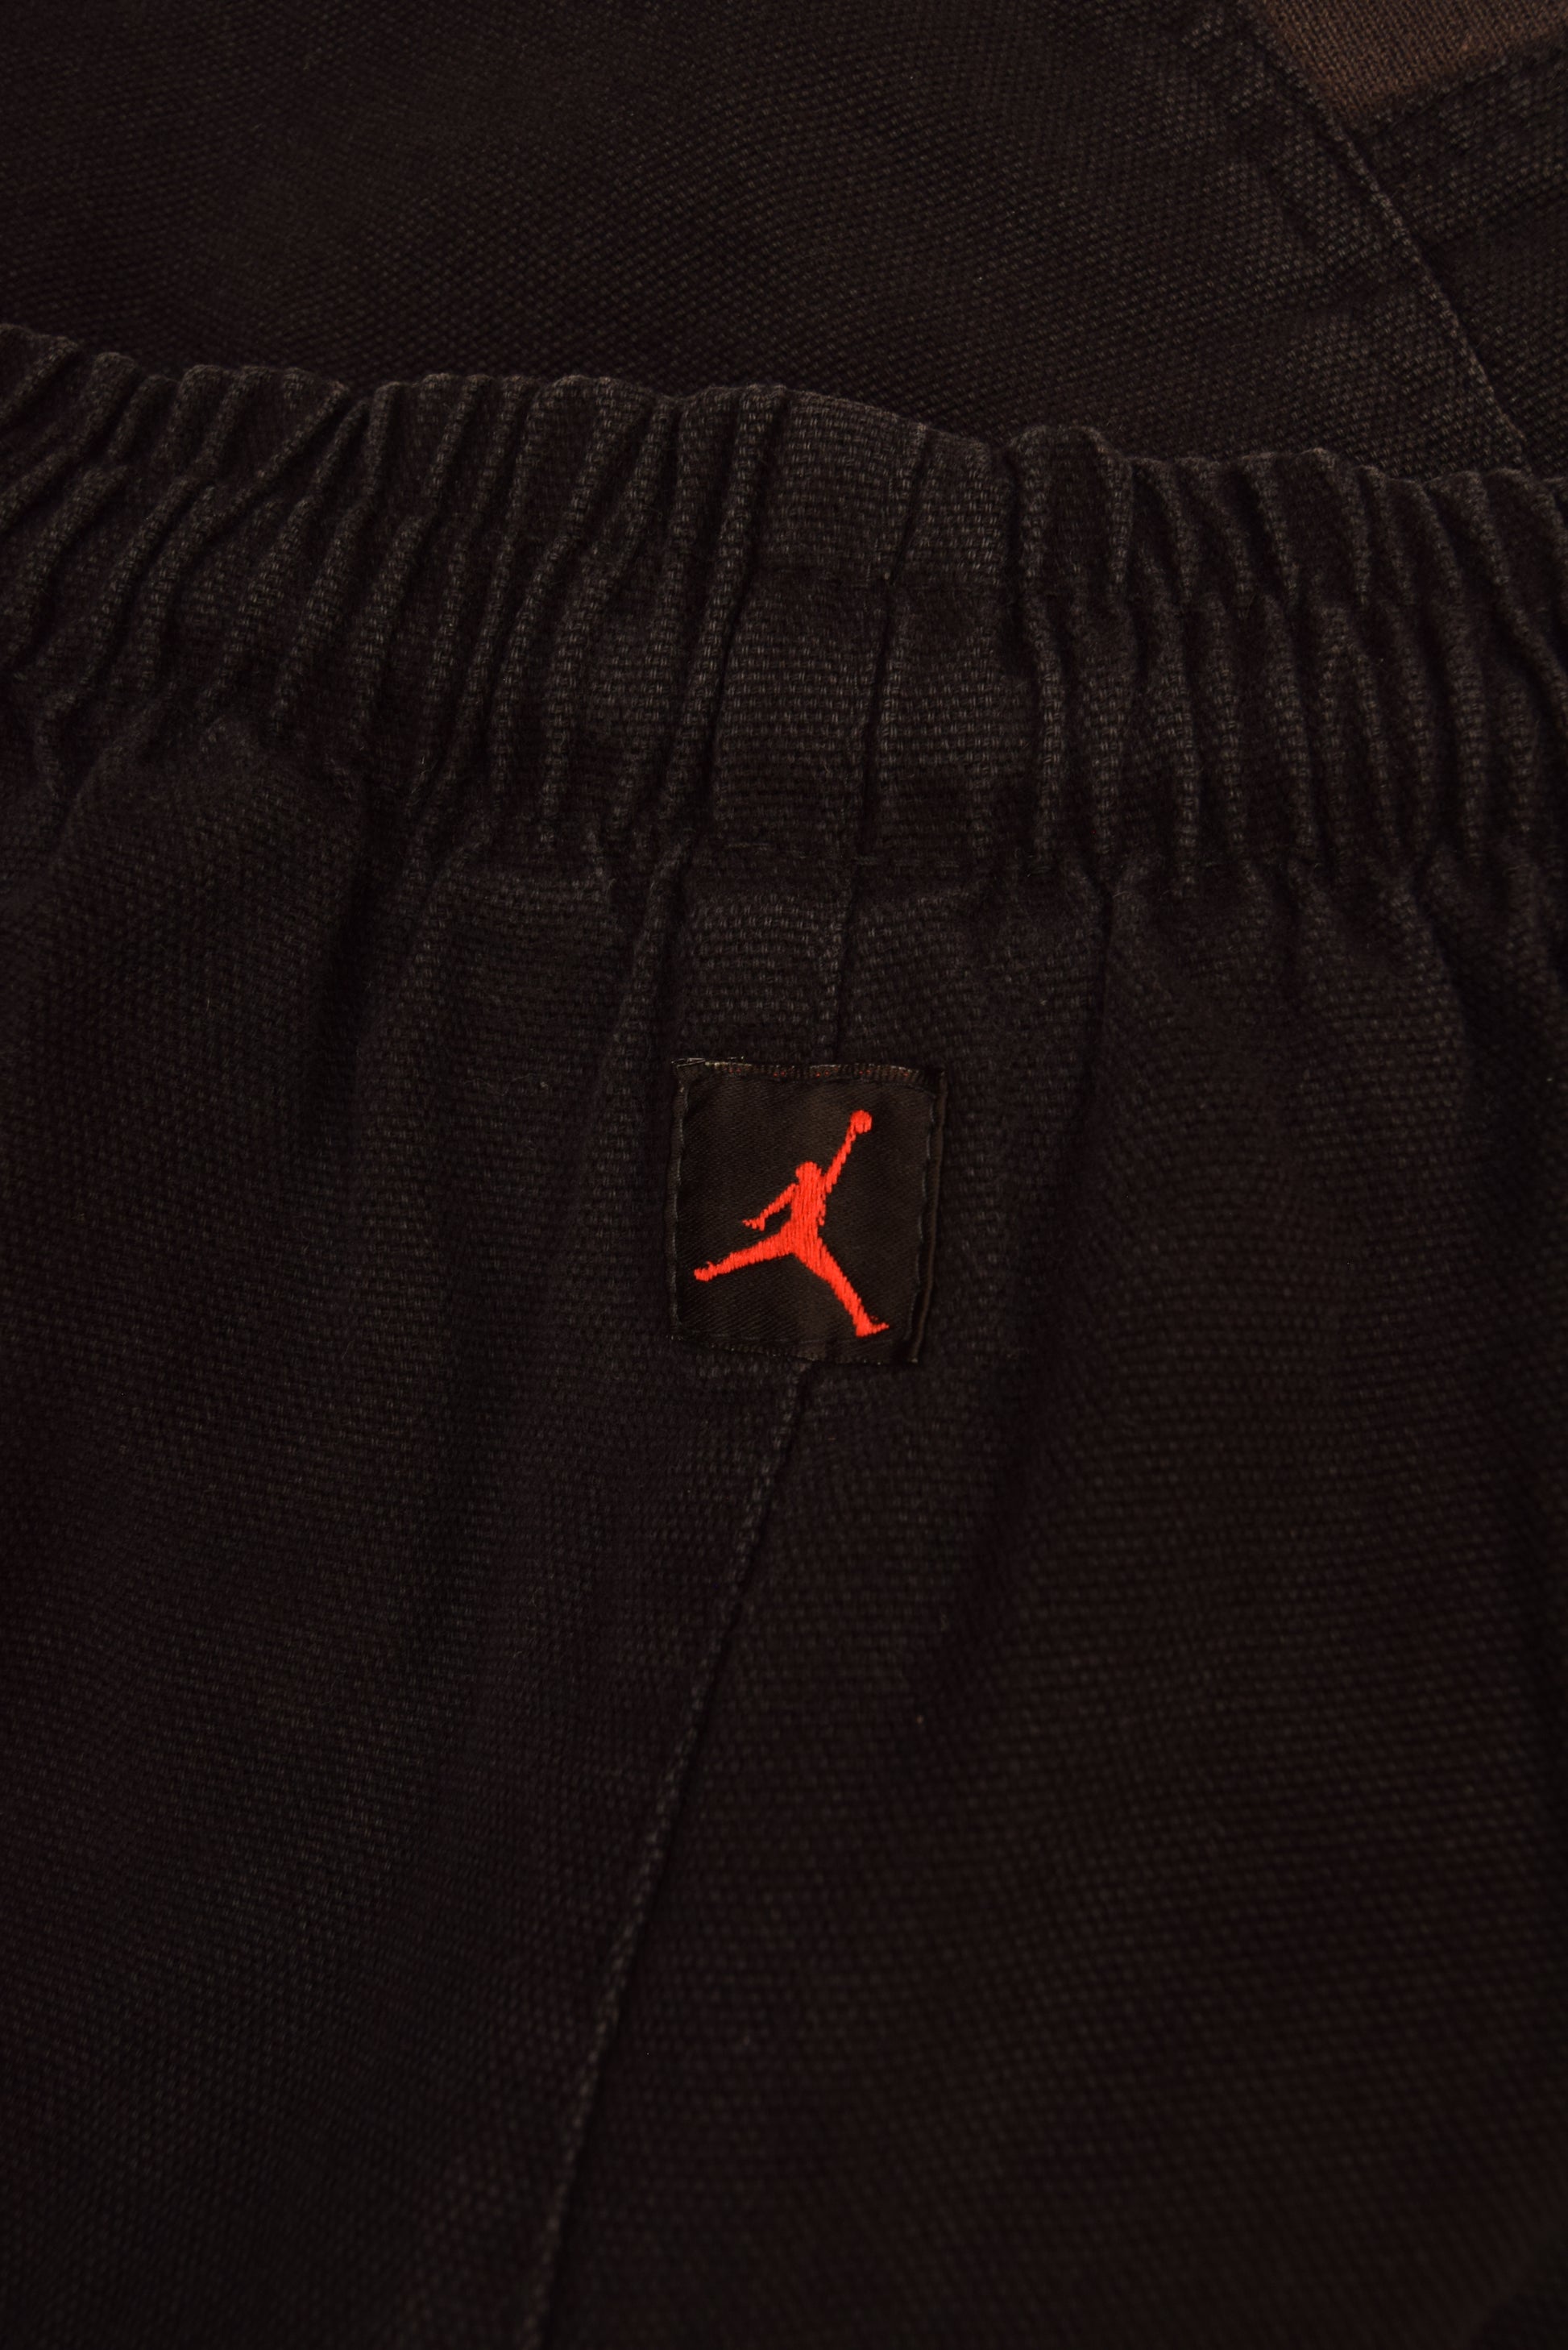 Vintage Nike Air Jordan Shorts Heavy Utilitarian 100% Cotton Size M